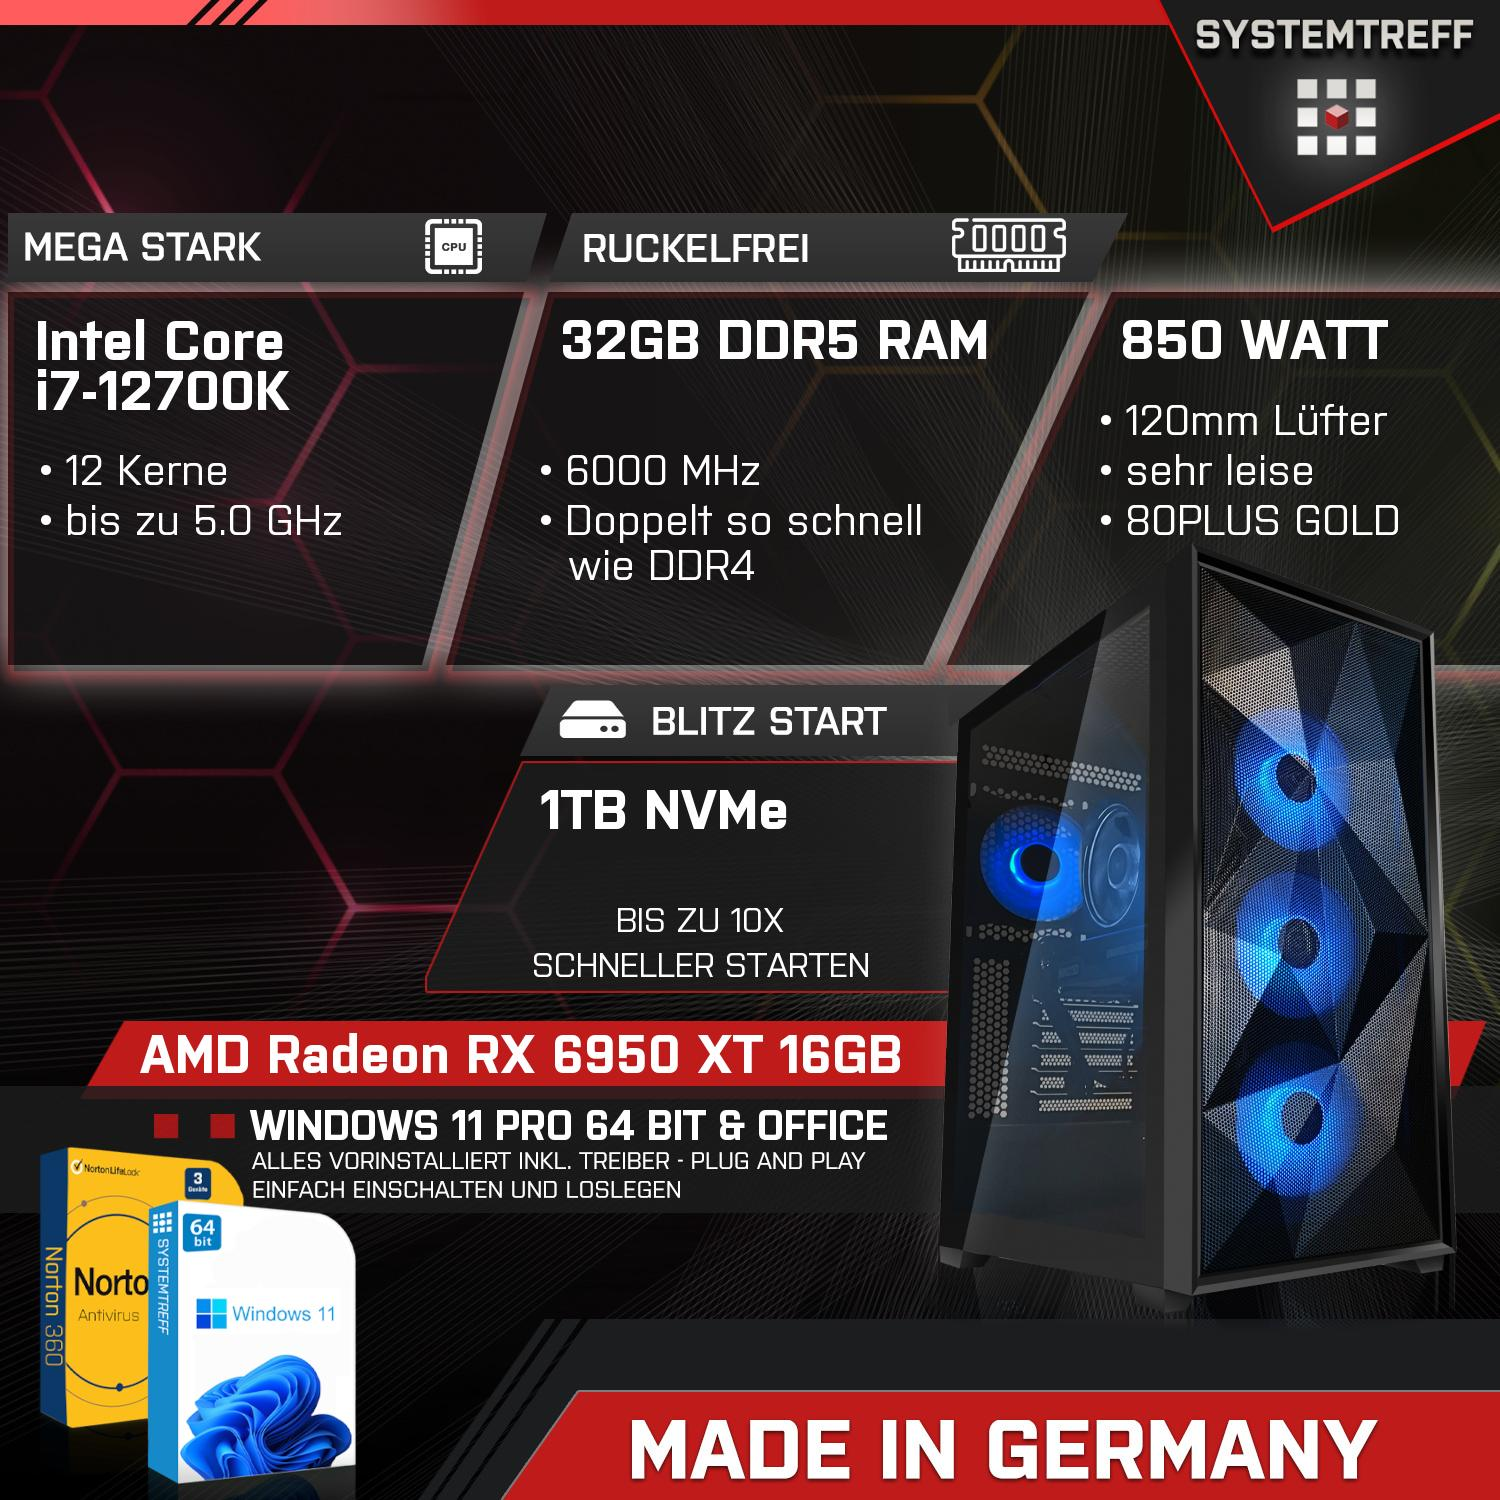 11 mit XT Gaming mSSD, GB 6950 Prozessor, PC 32 Intel® Core™ AMD SYSTEMTREFF High-End Gaming i7 GB i7-12700K, Radeon™ RX Windows Core Pro, RAM, 1000 Intel